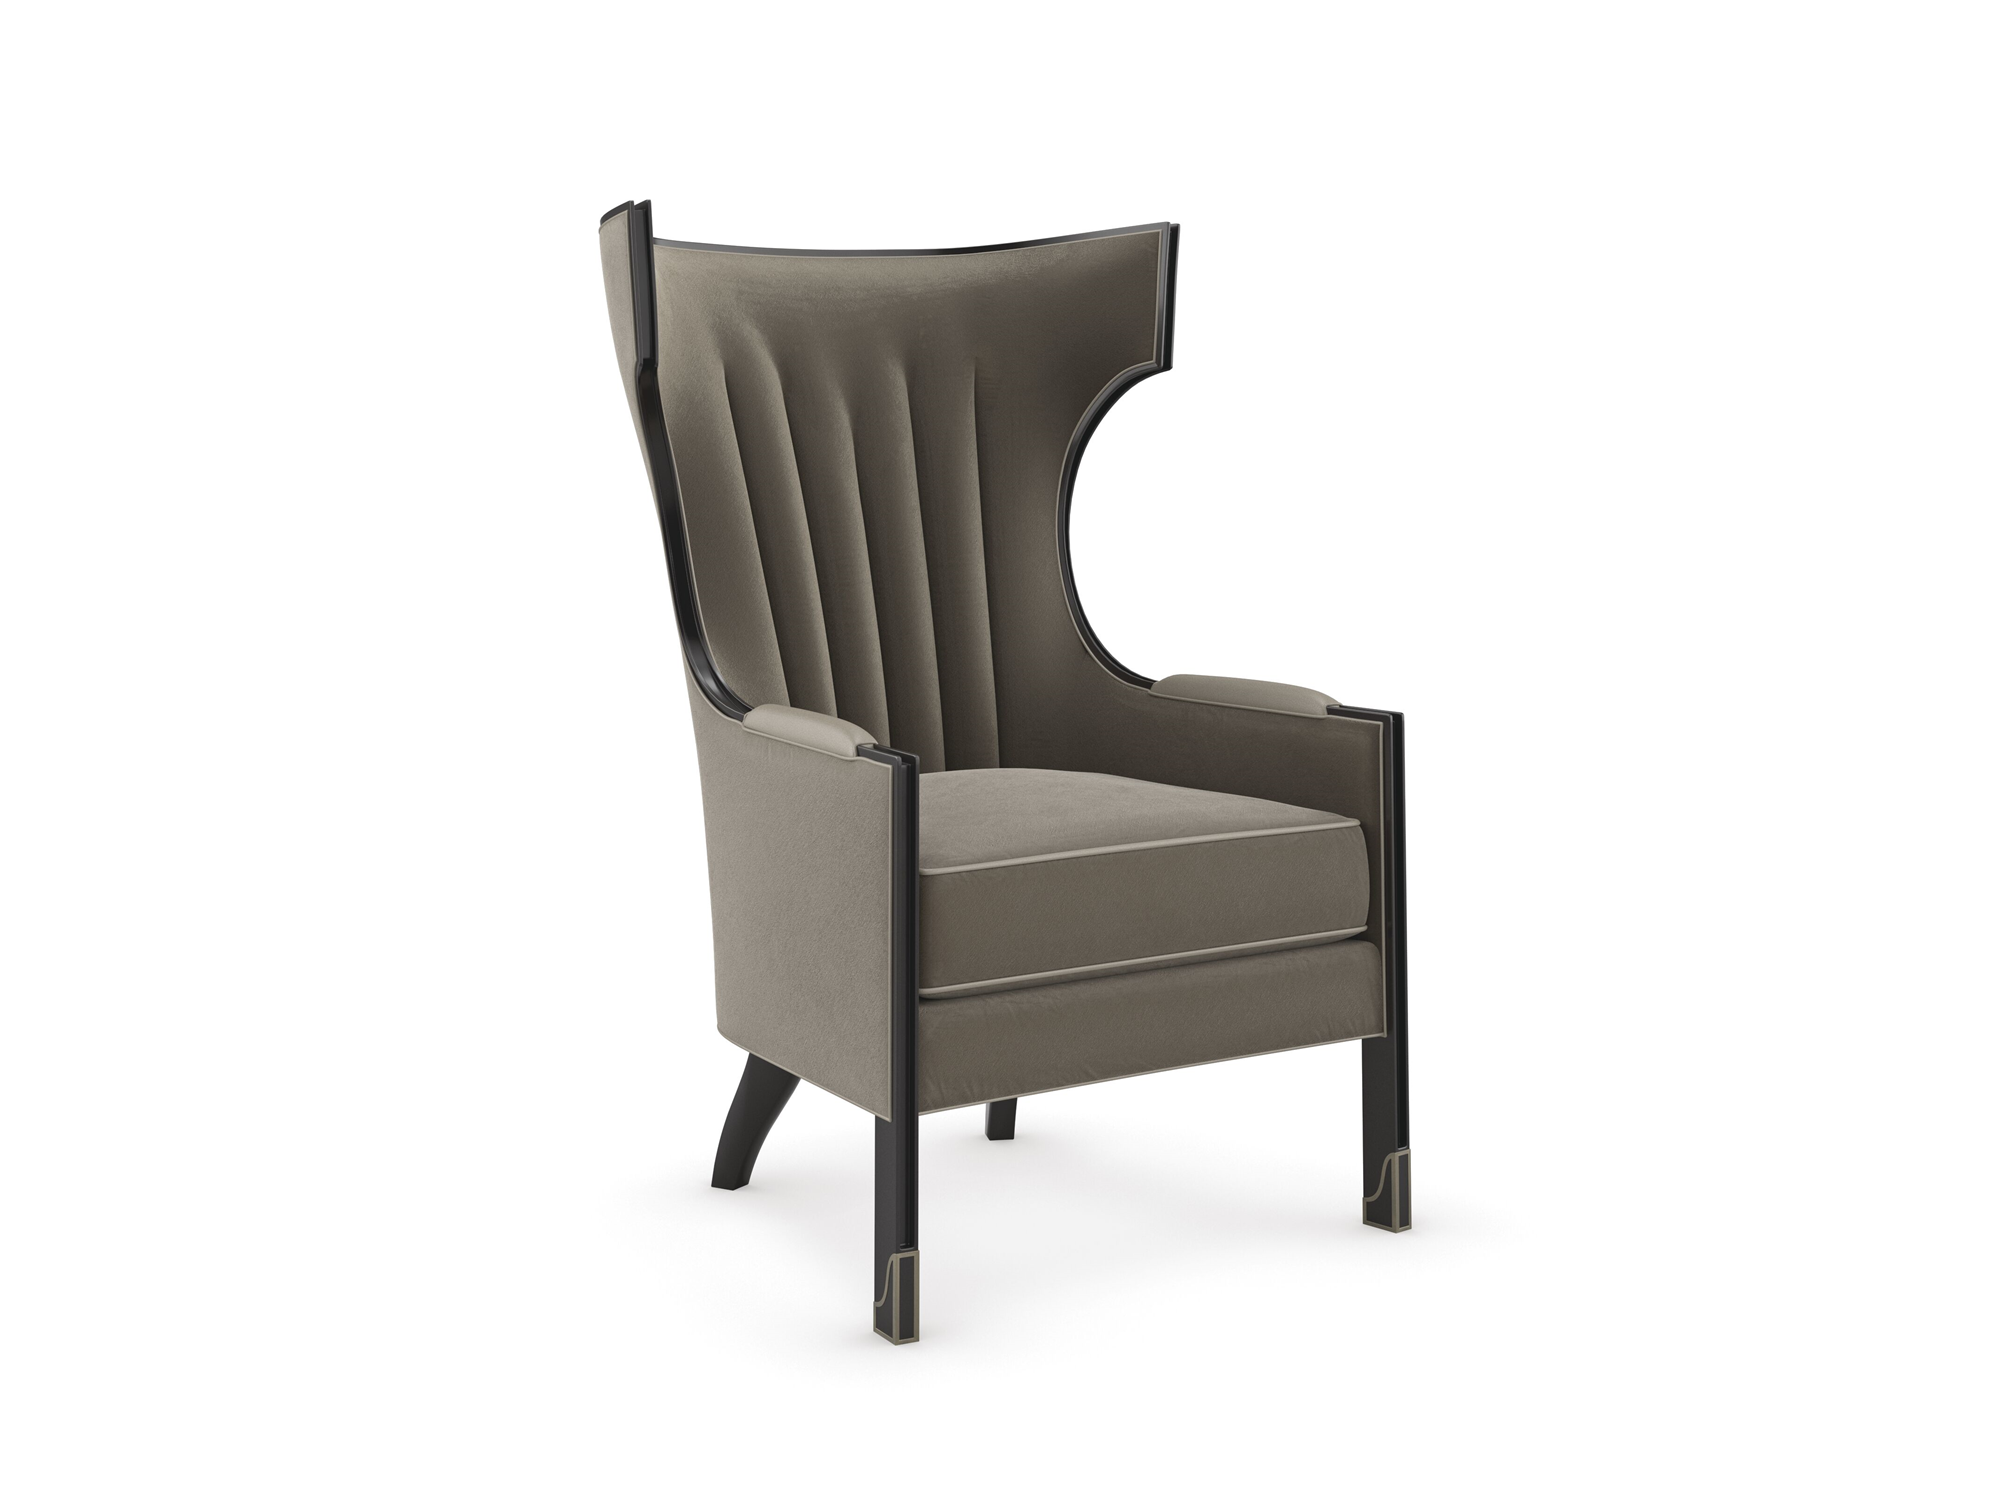 Desmond Wing Tip Chair - Euro Living Furniture